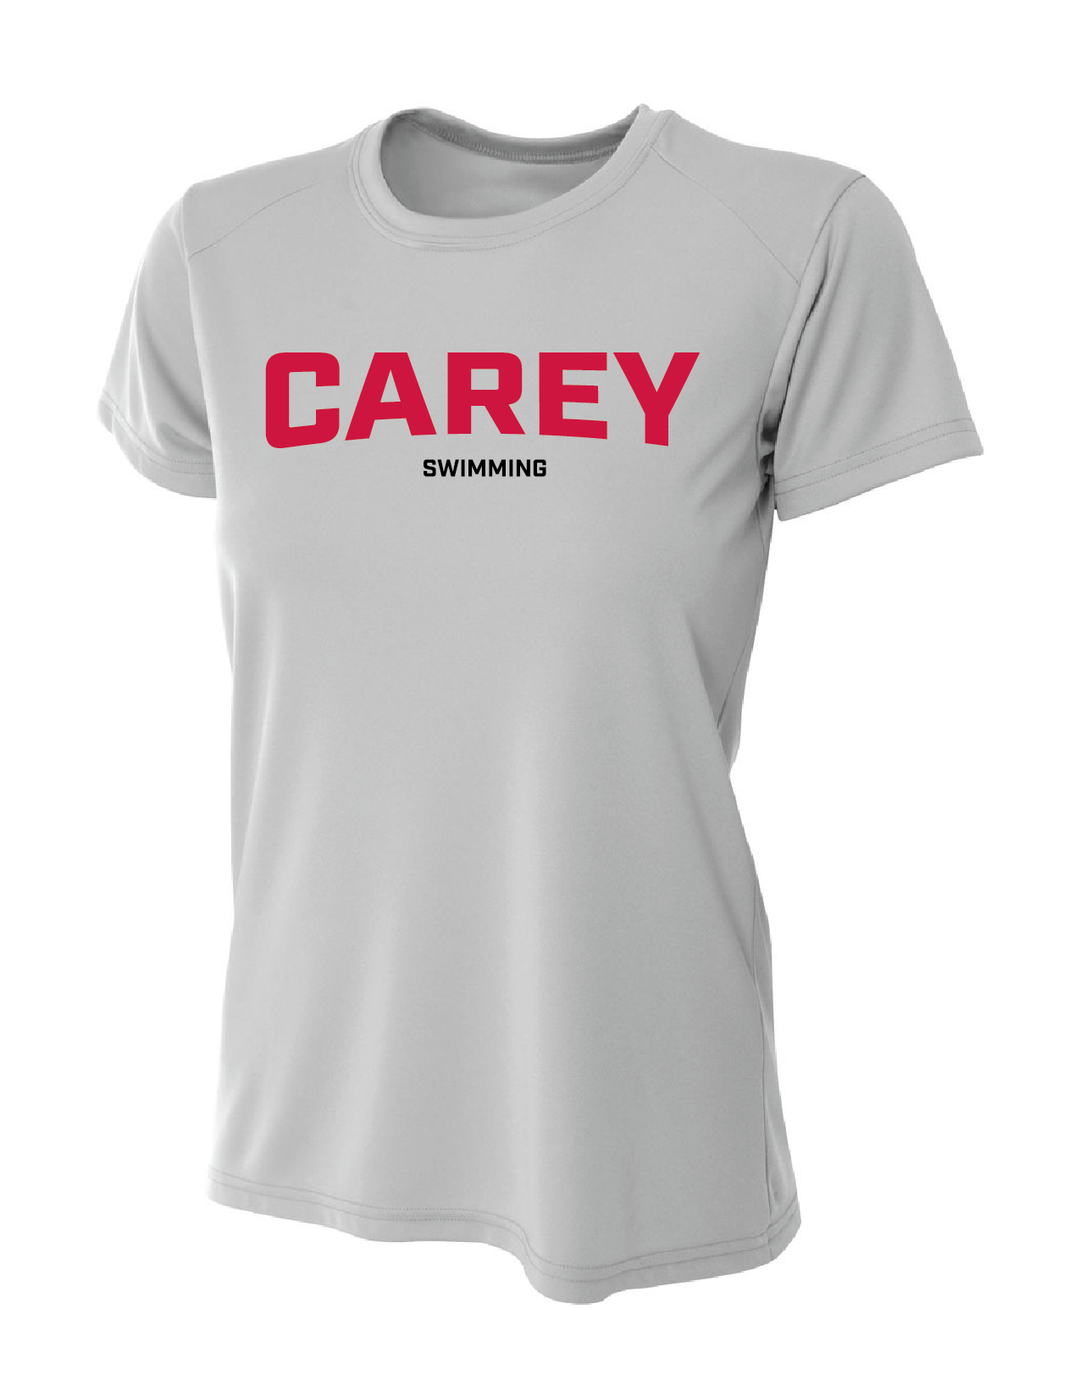 WCU Swimming Women's Short-Sleeve Performance Shirt WCU Swim Silver Carey - Third Coast Soccer